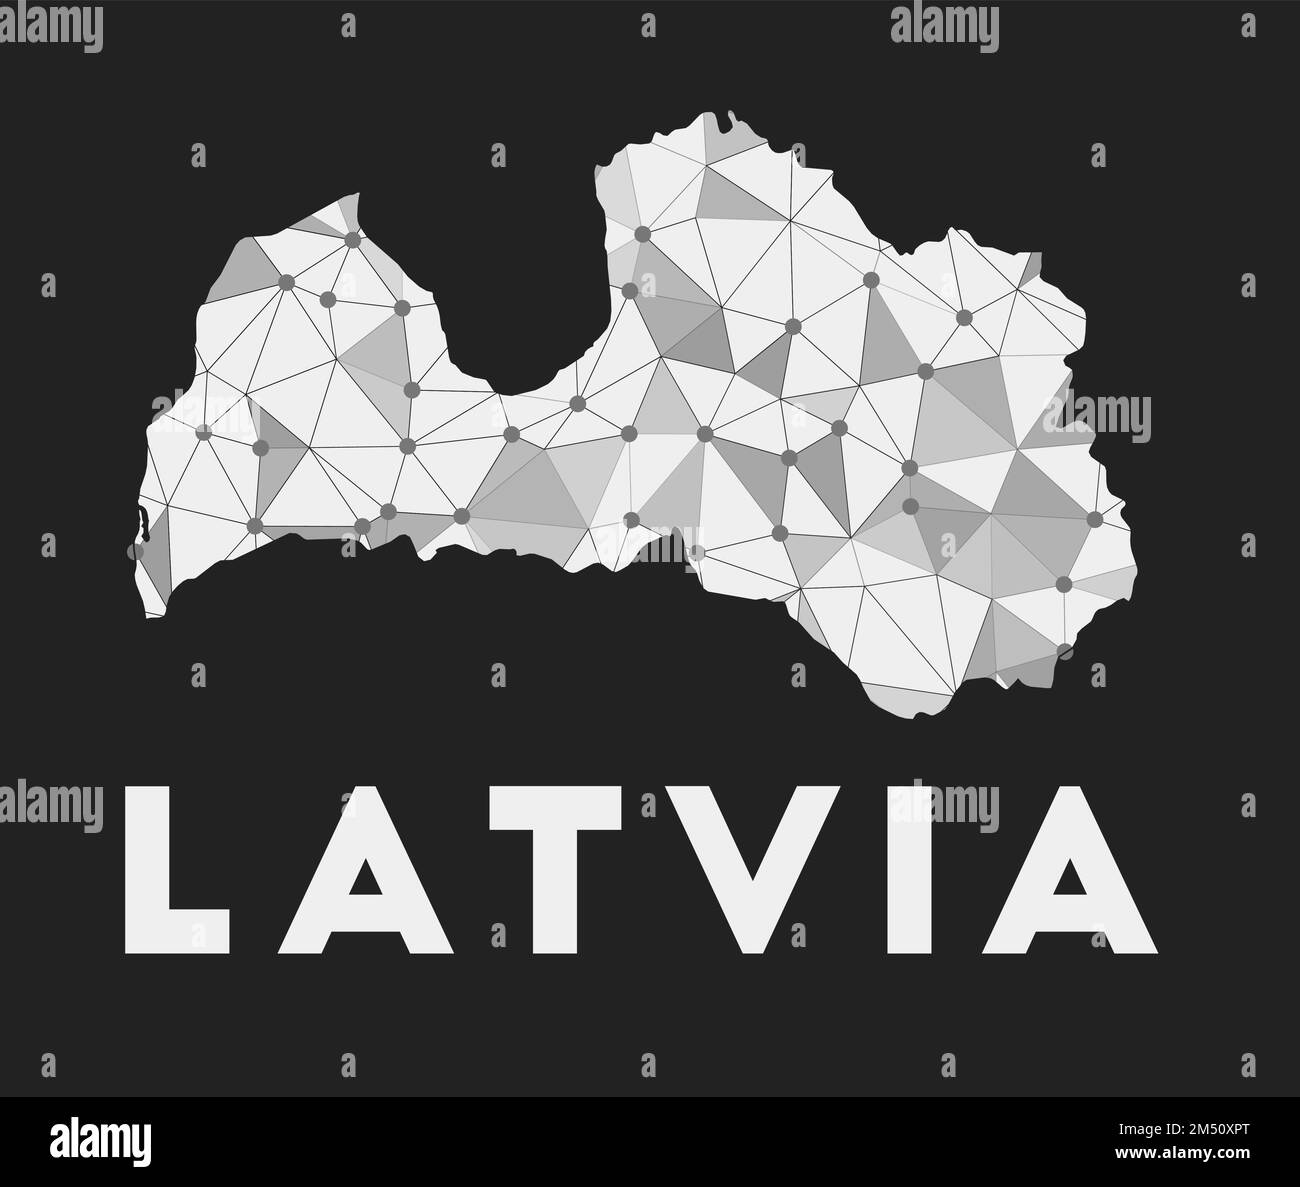 Latvia - communication network map of country. Latvia trendy geometric design on dark background. Technology, internet, network, telecommunication con Stock Vector